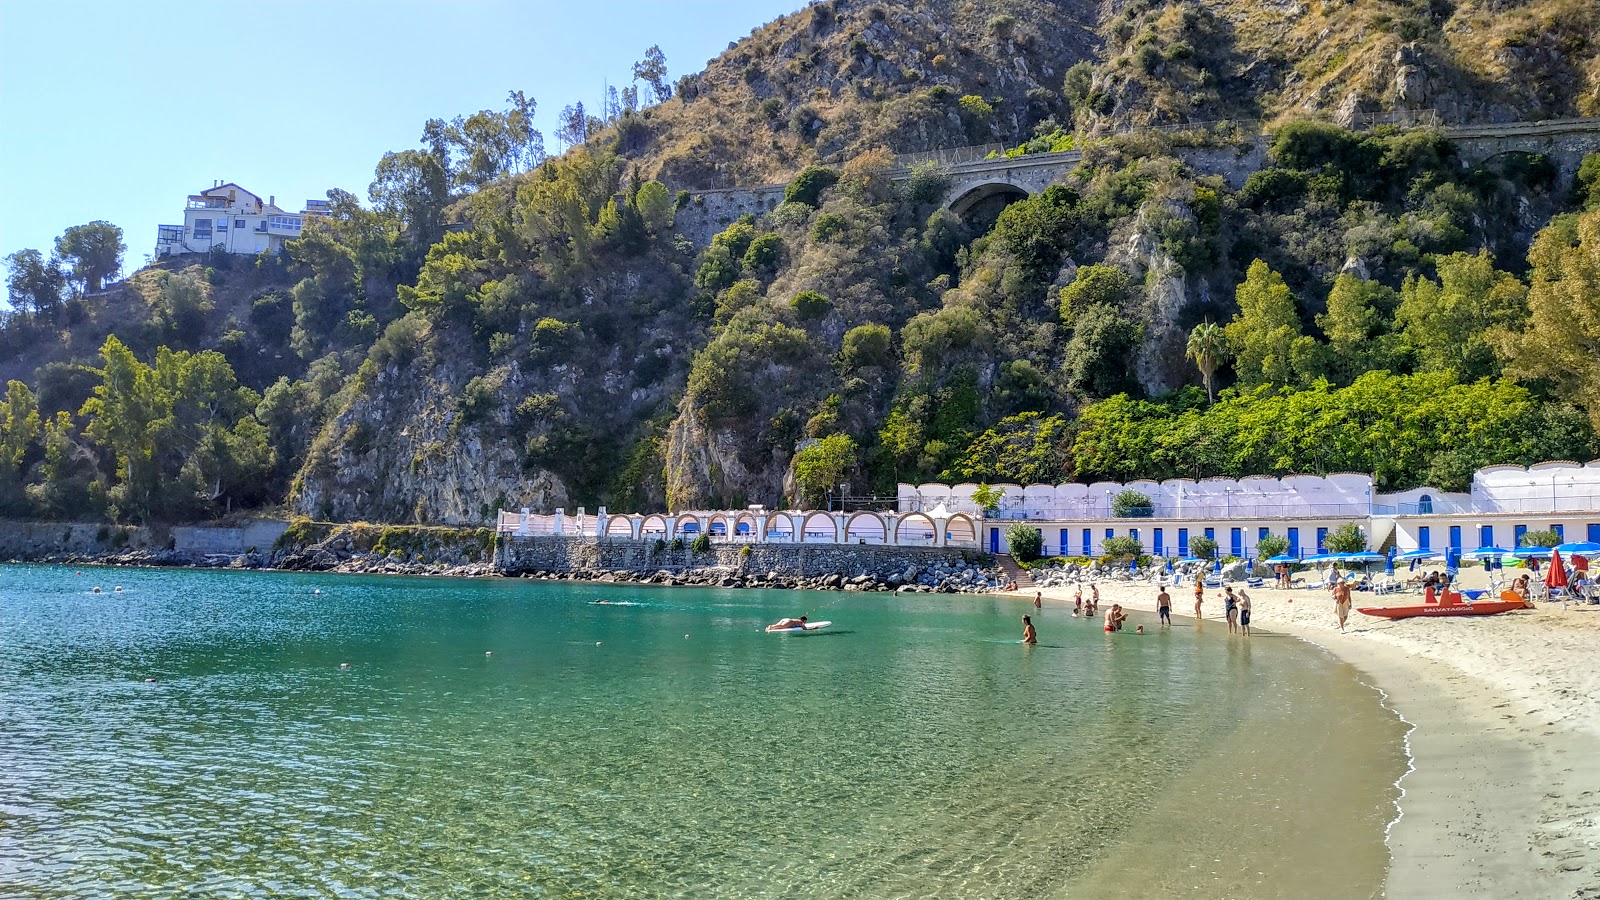 Spiaggia di Copanello'in fotoğrafı mavi sular yüzey ile